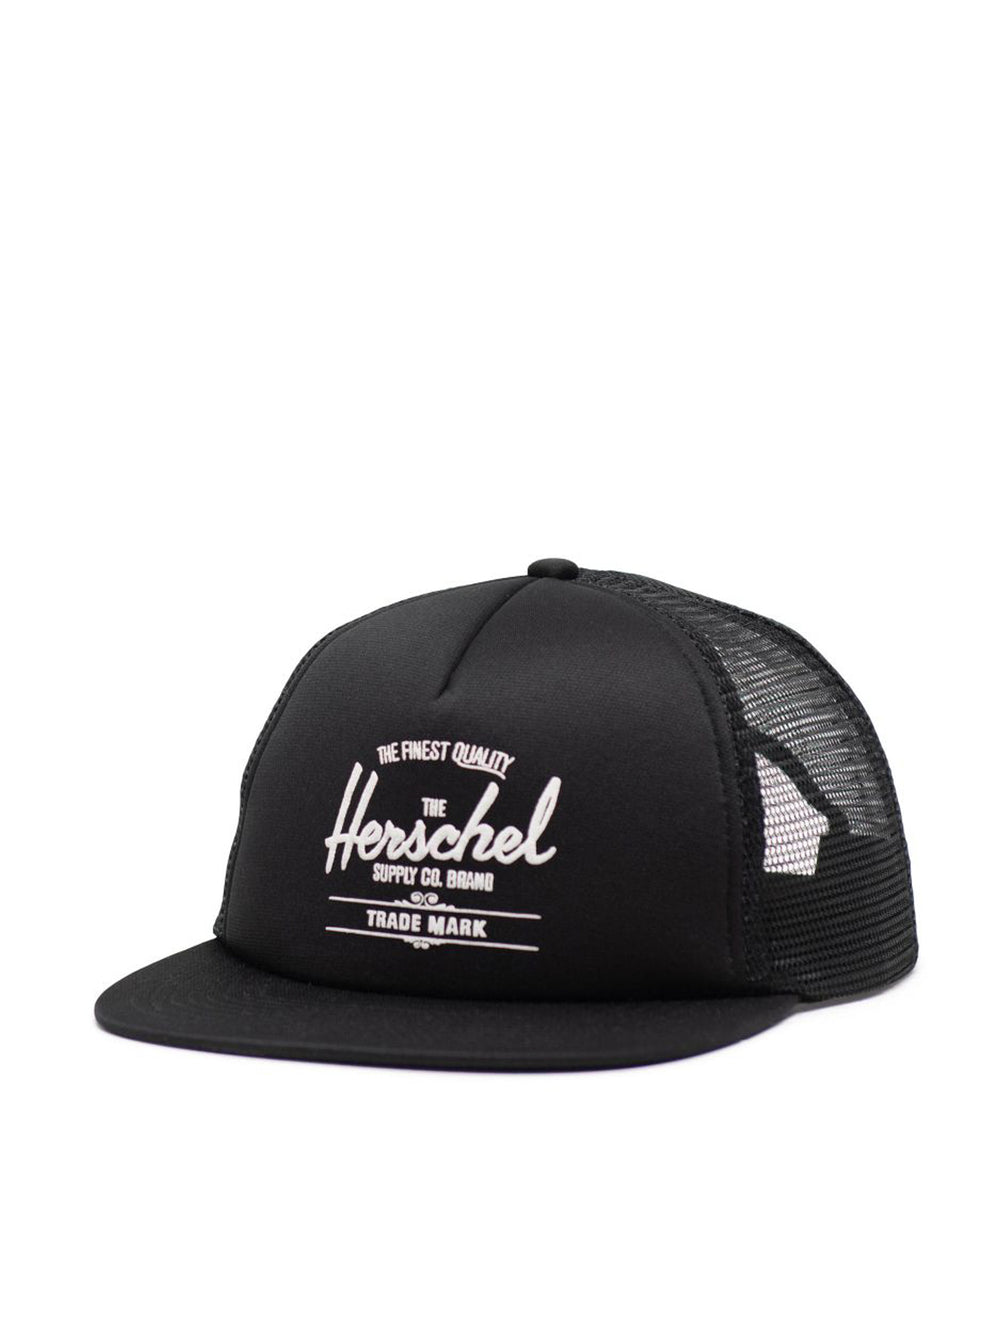 HERSCHEL SUPPLY CO. WHALER TRUCKER HAT - BLACK - CLEARANCE